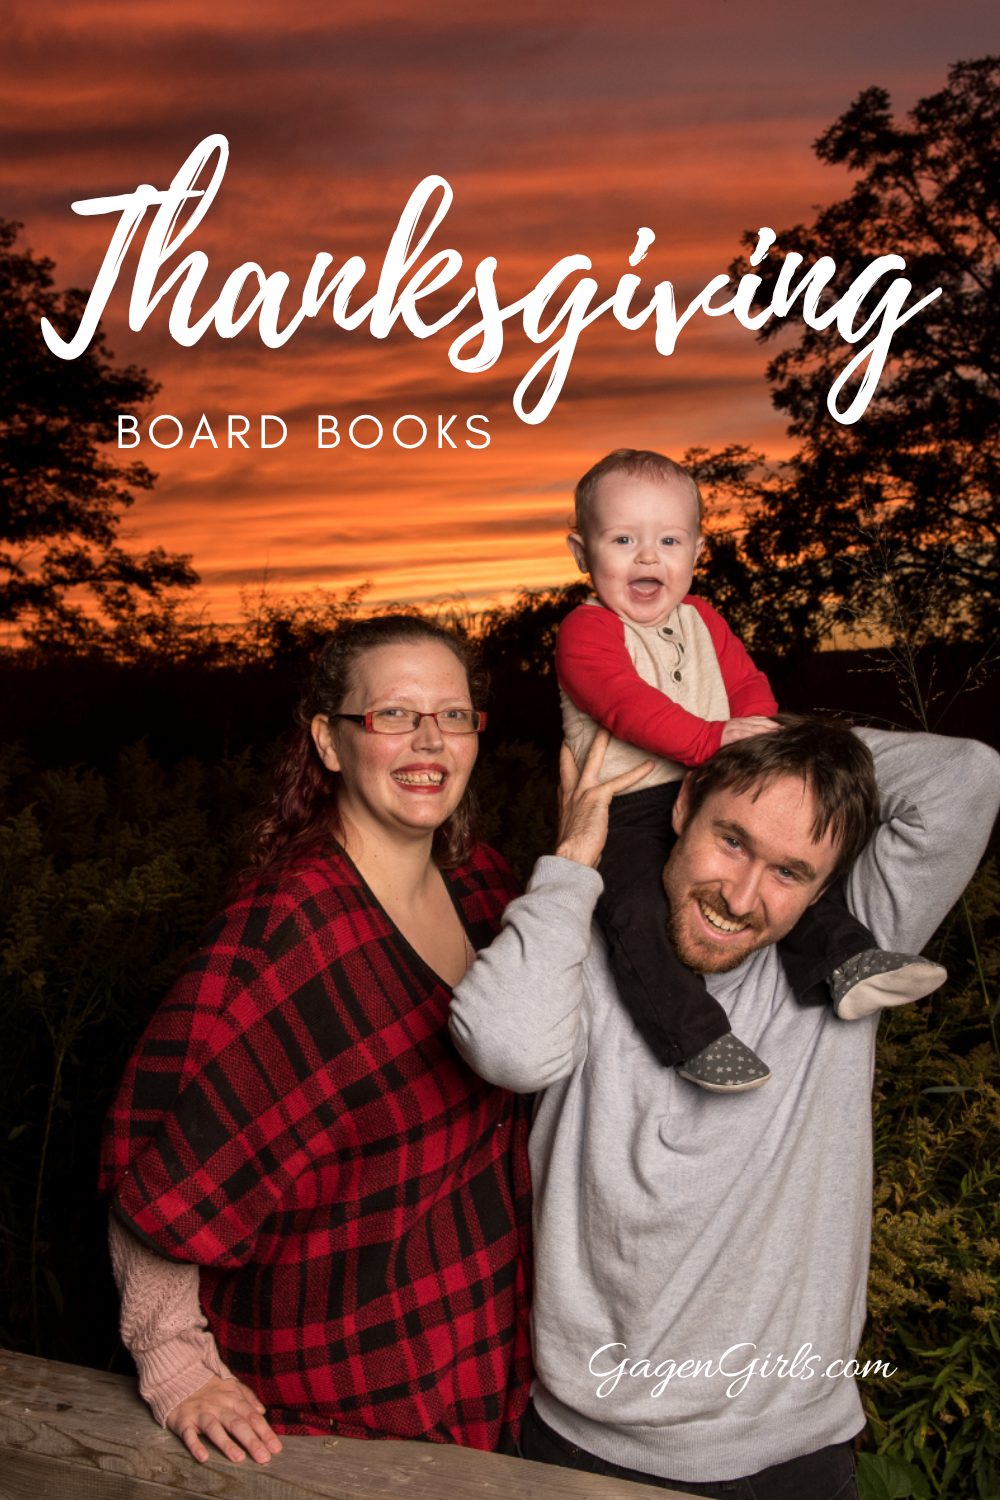 Thanksgiving Board Books @ GagenGirls.com